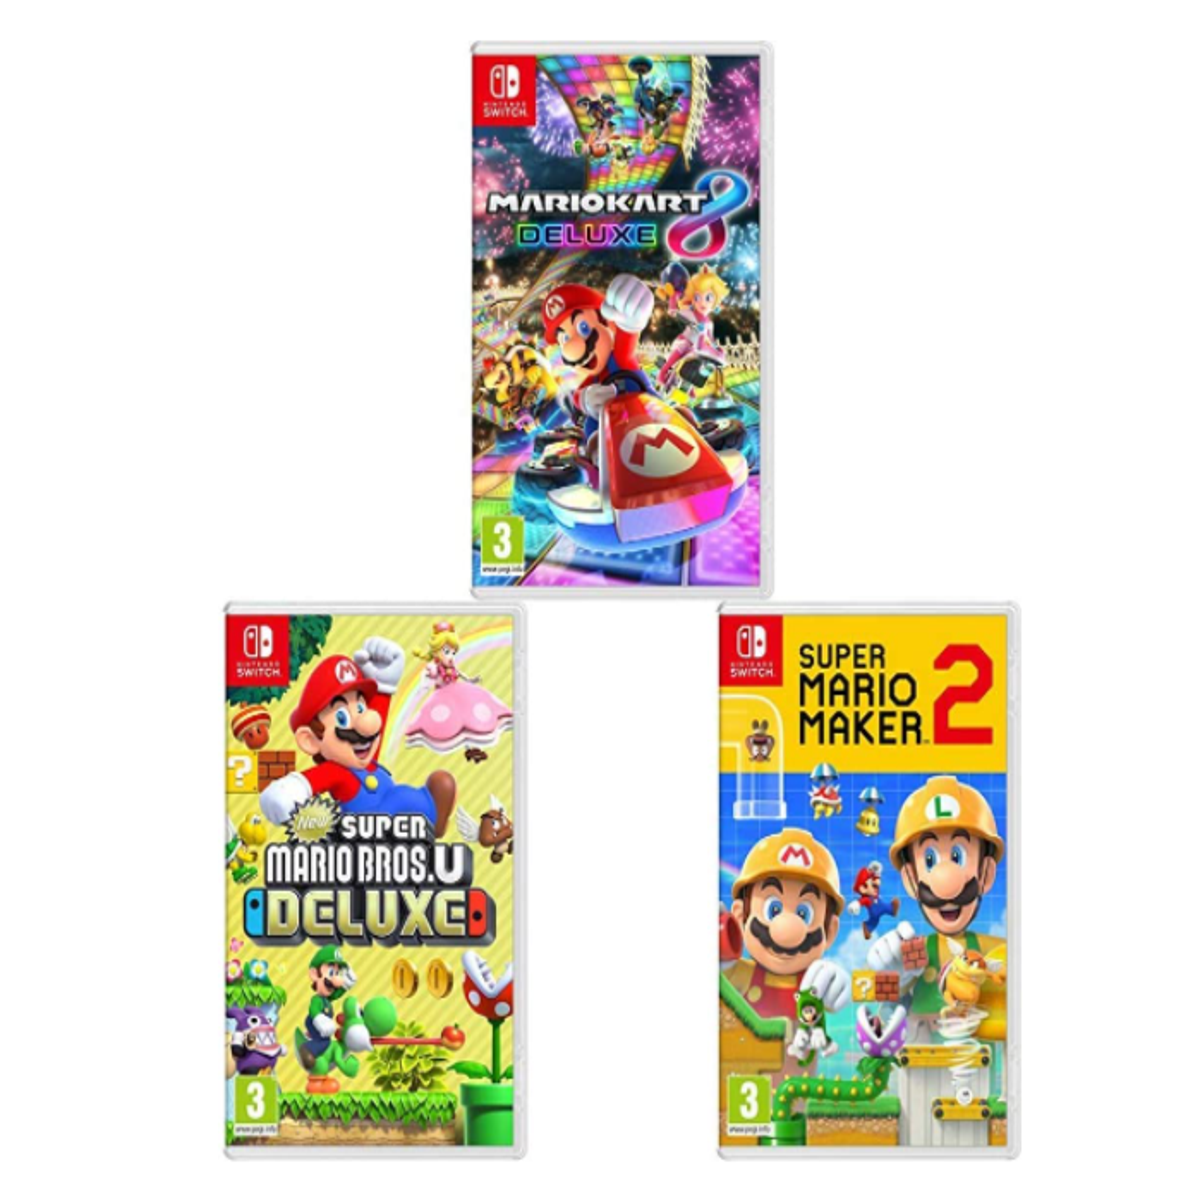 New Super Mario Bros. U Deluxe + Mario Kart 8 Deluxe - Two Game Bundle -  Nintendo Switch (European Version) : Video Games 